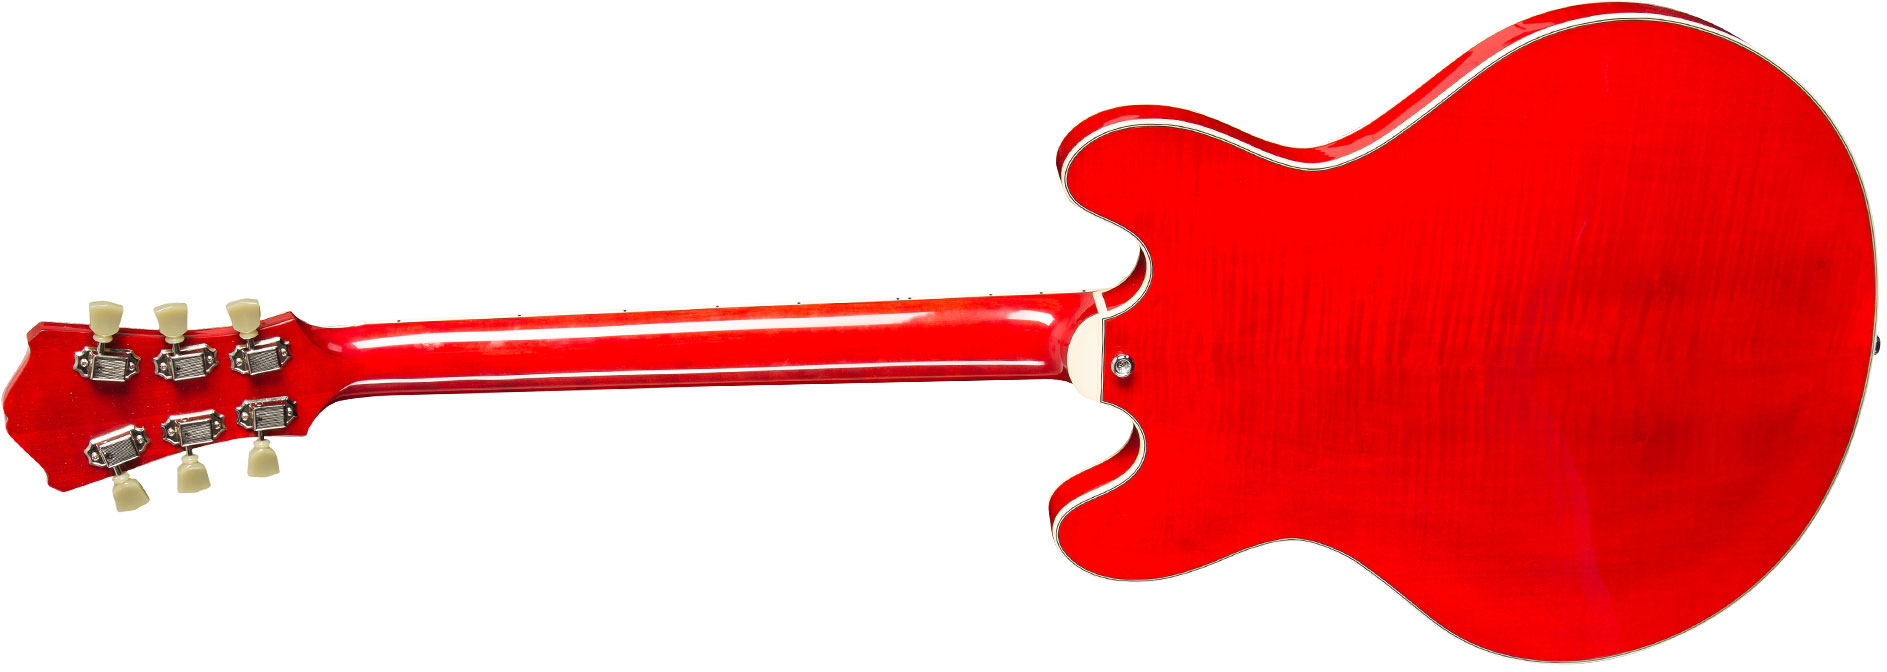 Eastman T486 Thinline Laminate Tout Erable Hh Seymour Duncan Ht Eb - Red - Semi-hollow electric guitar - Variation 1